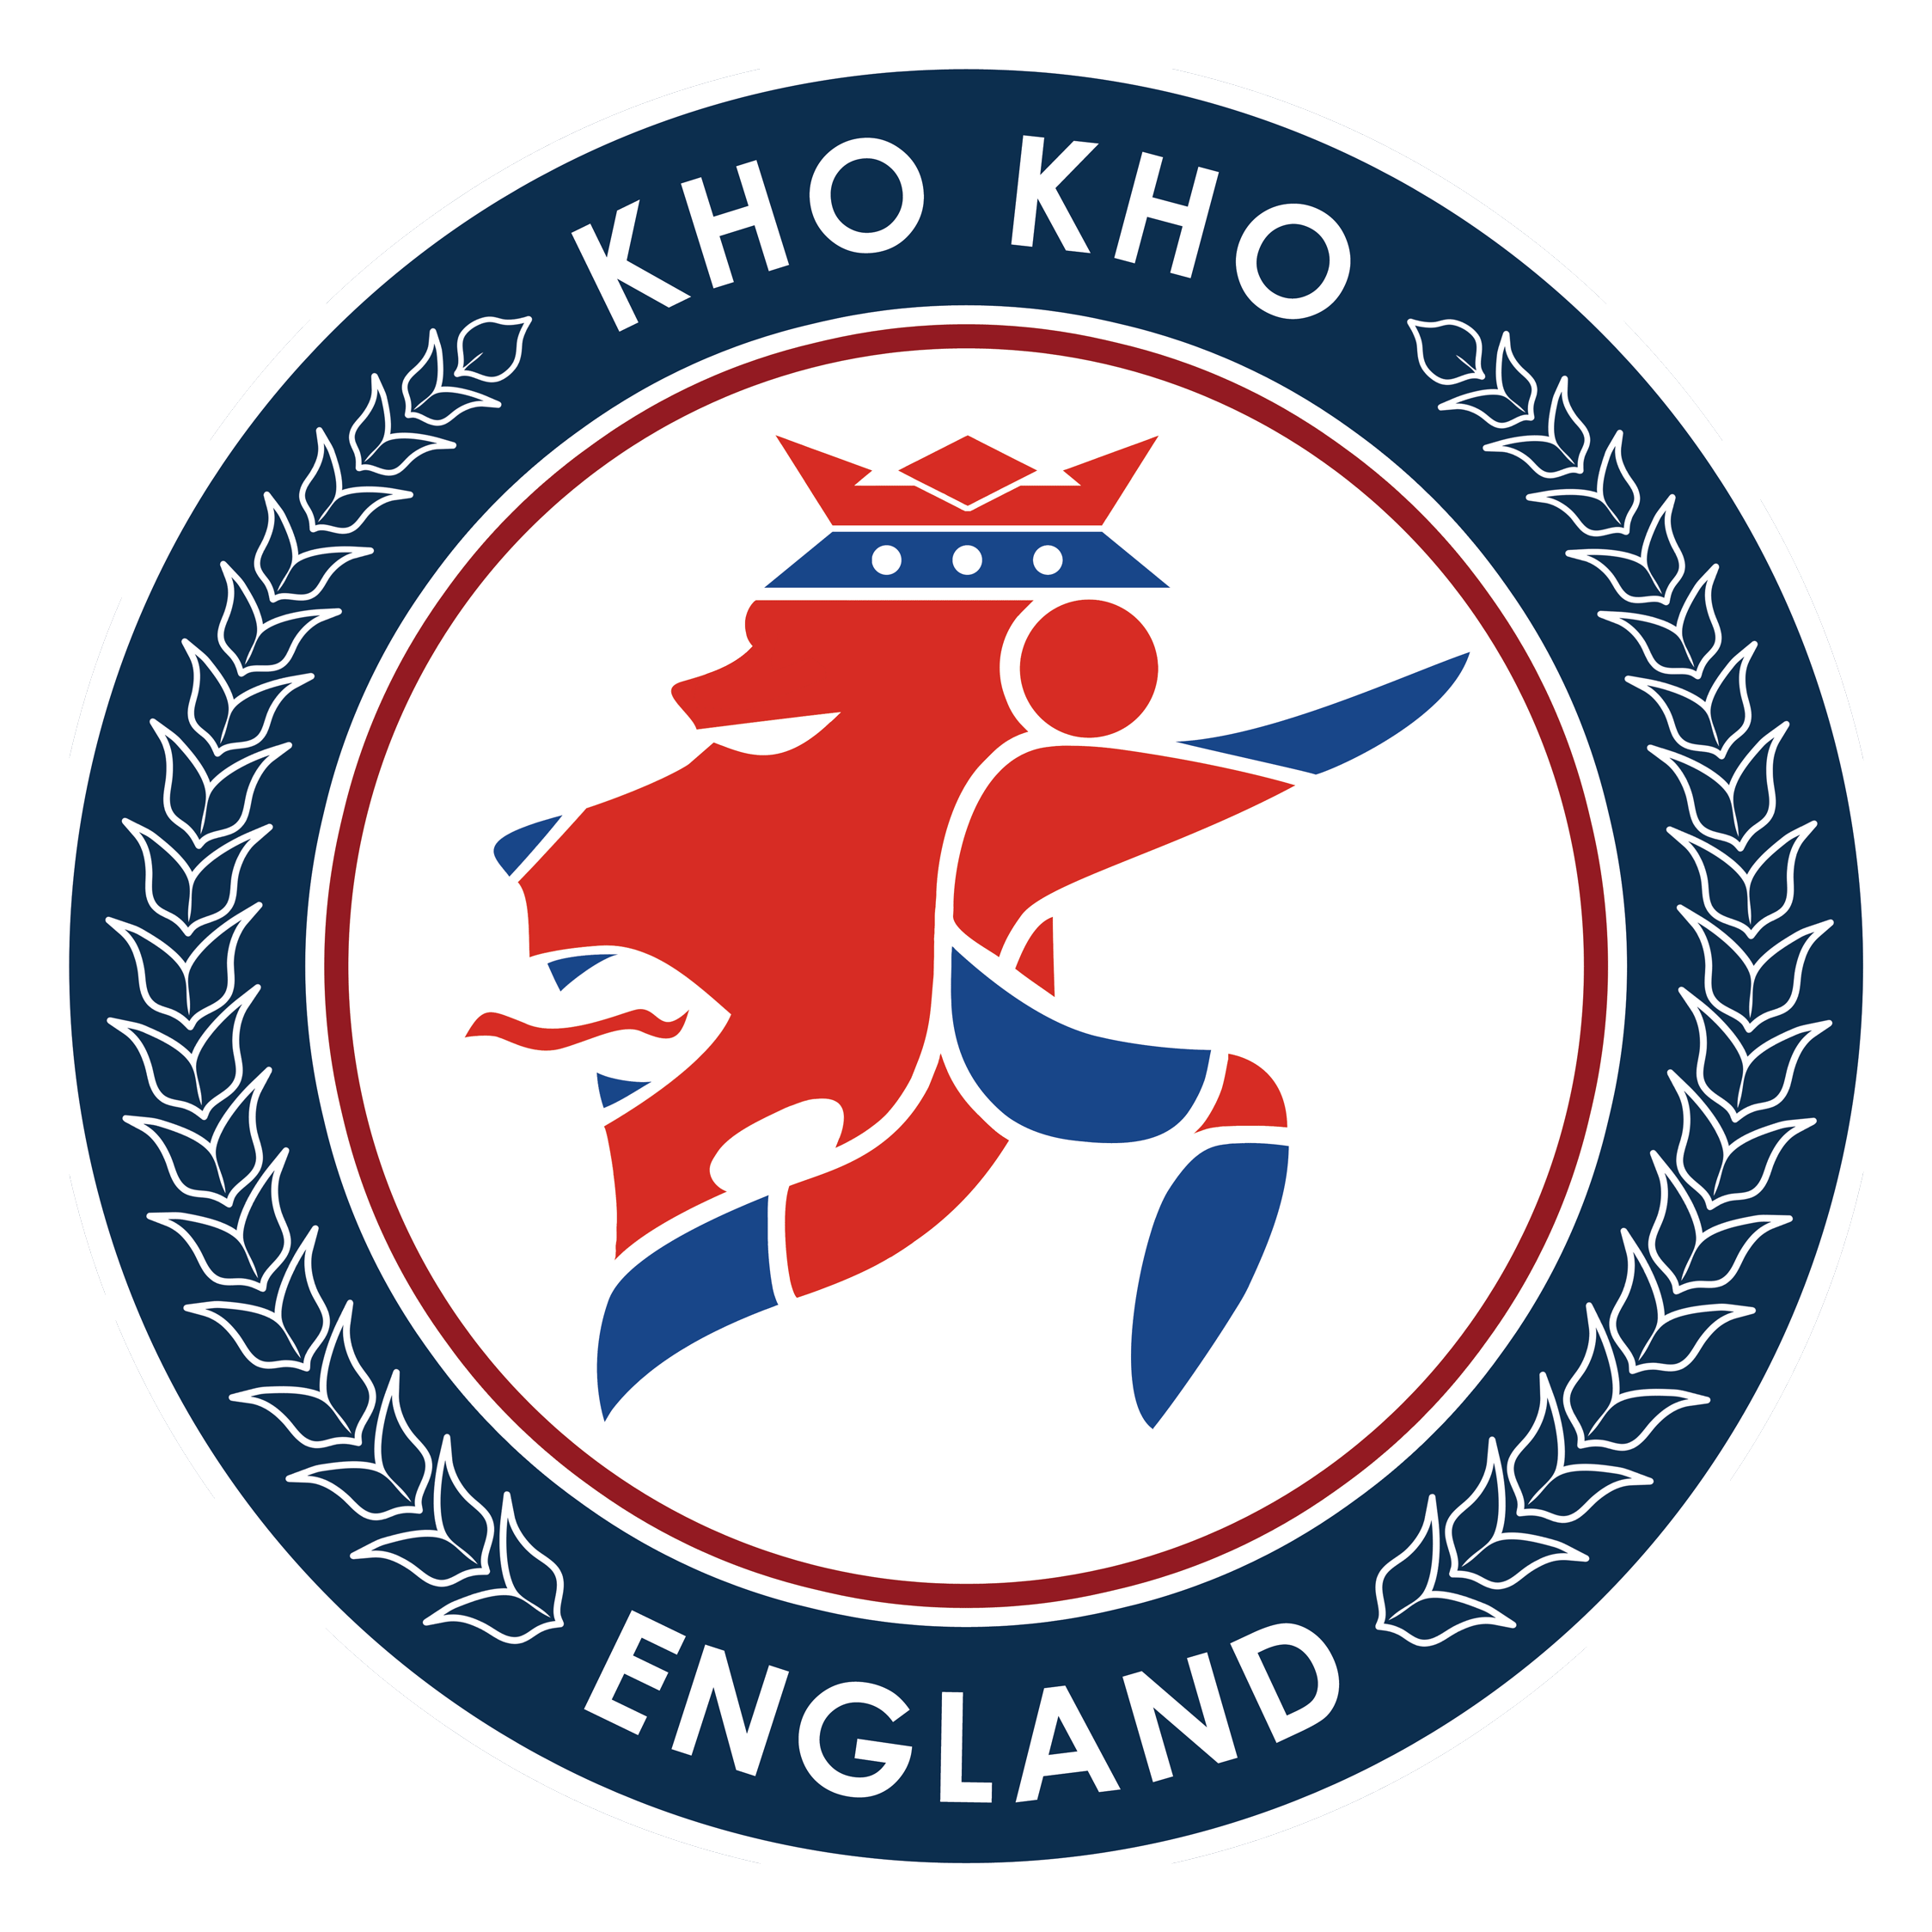 Welcome To The Kho Kho Federation Of England - Kho Kho Game, Transparent background PNG HD thumbnail